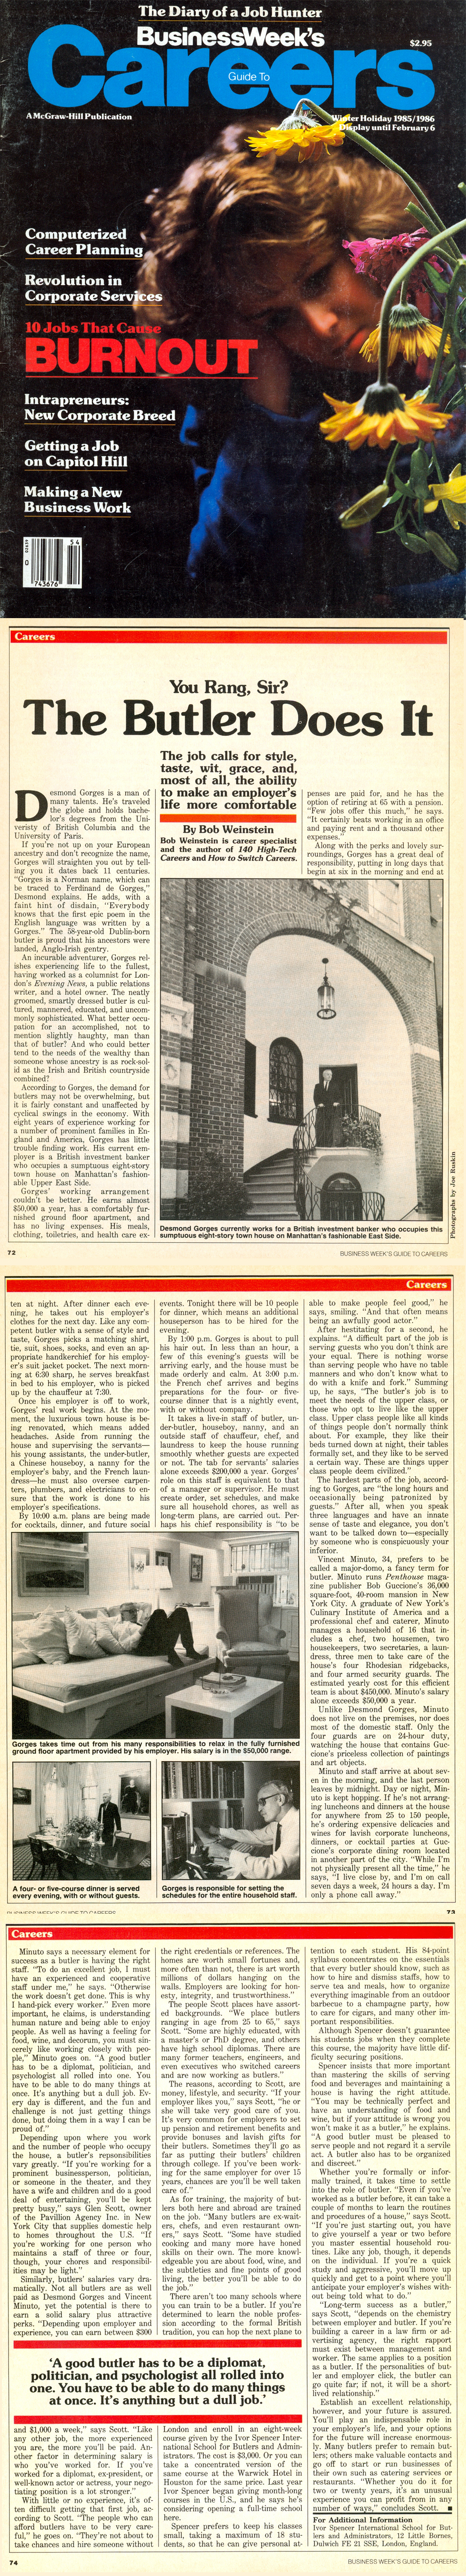 1986 Business Week Article